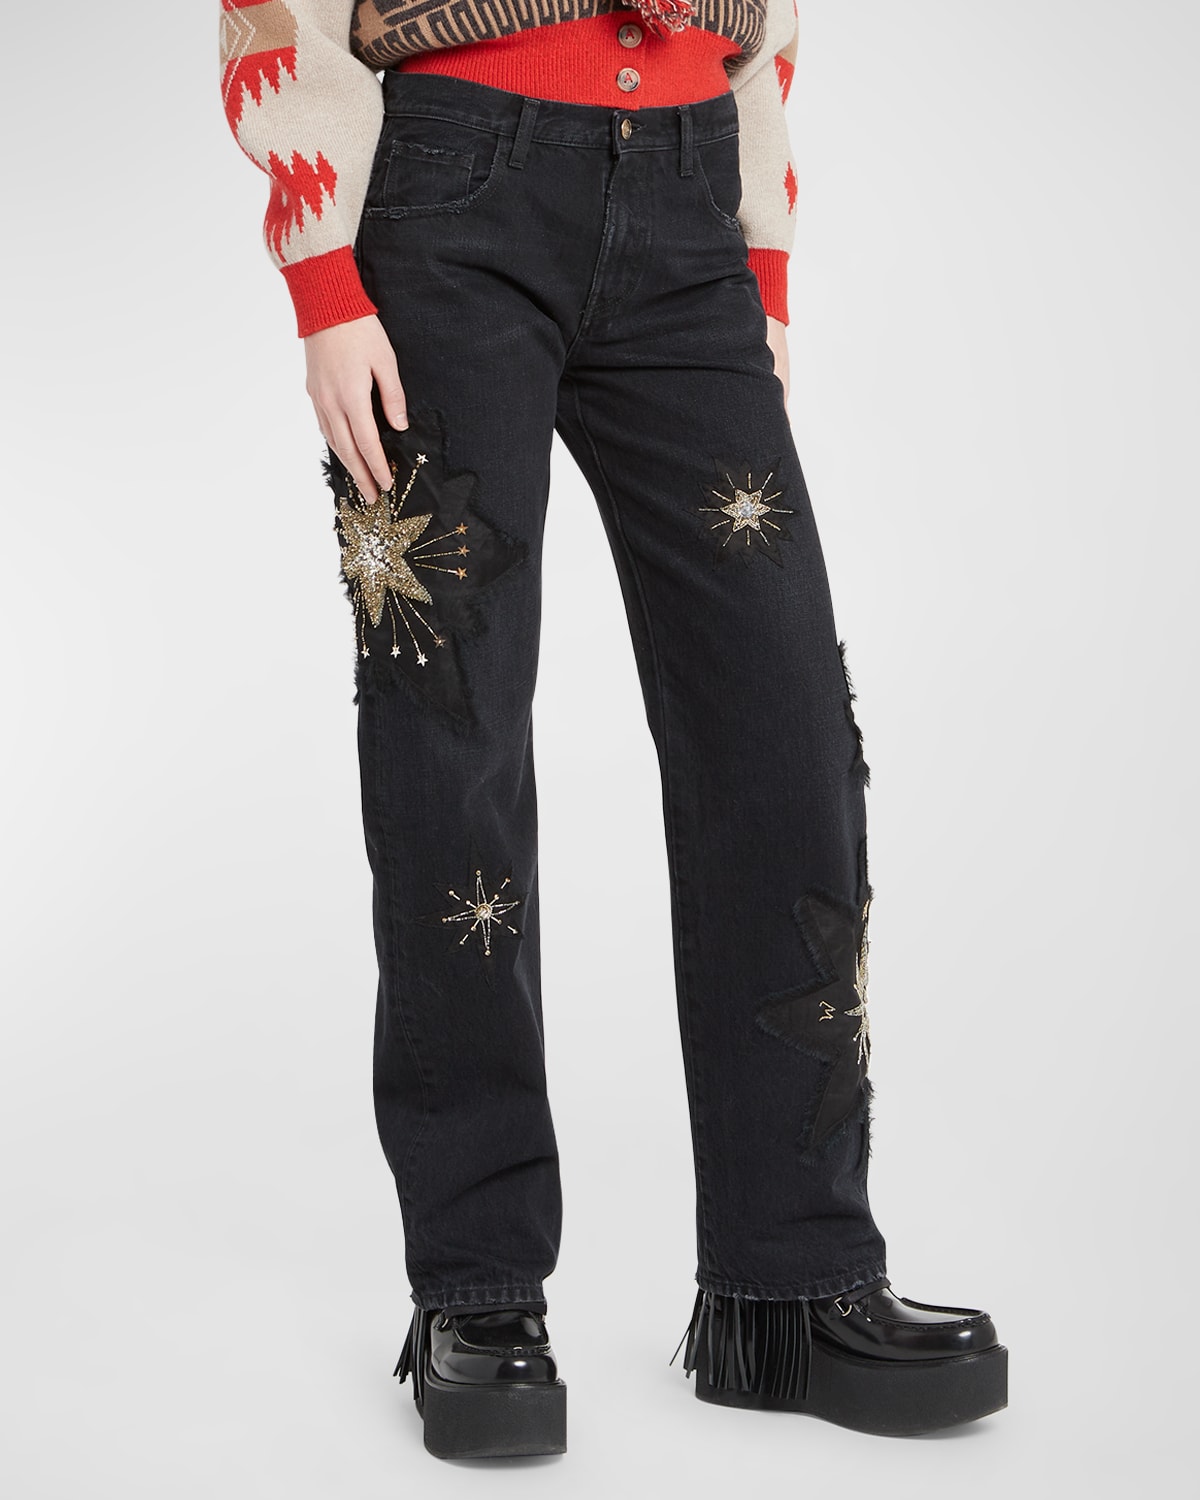 The Wandering Star Embellished Denim Pants